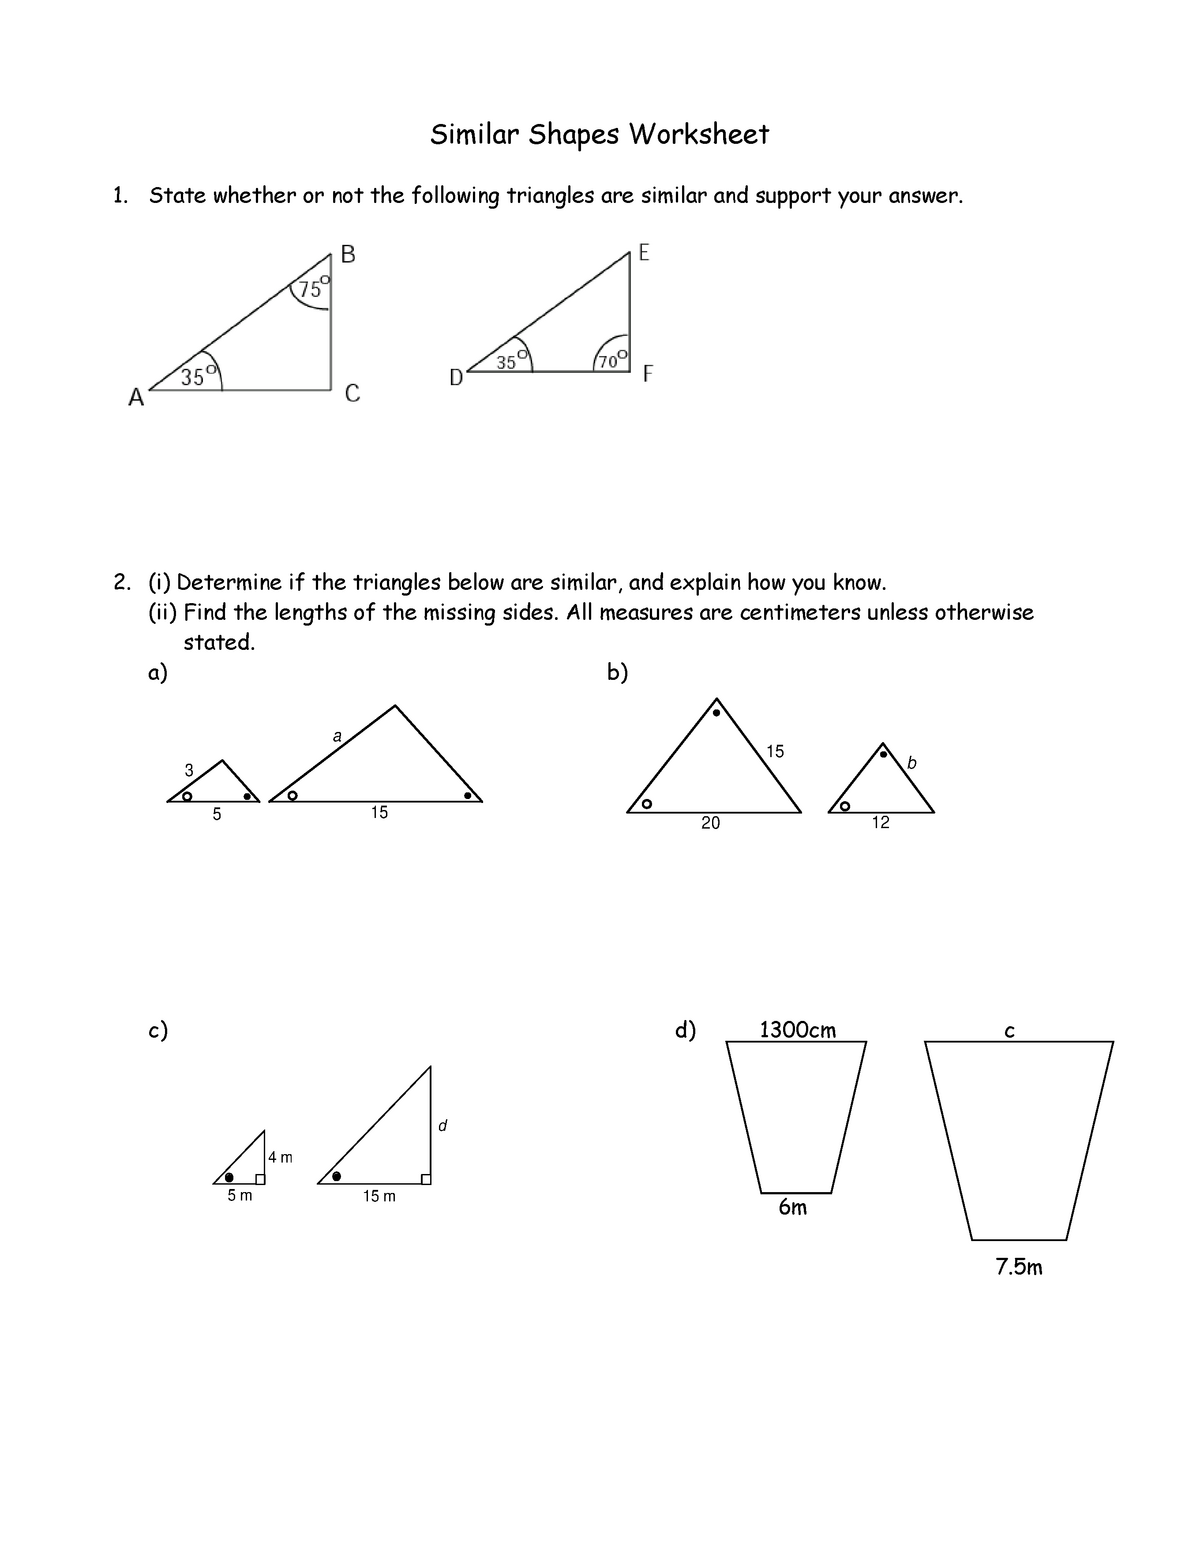 Similar Triangles Worksheet-2 - Similar Shapes Worksheet State whether